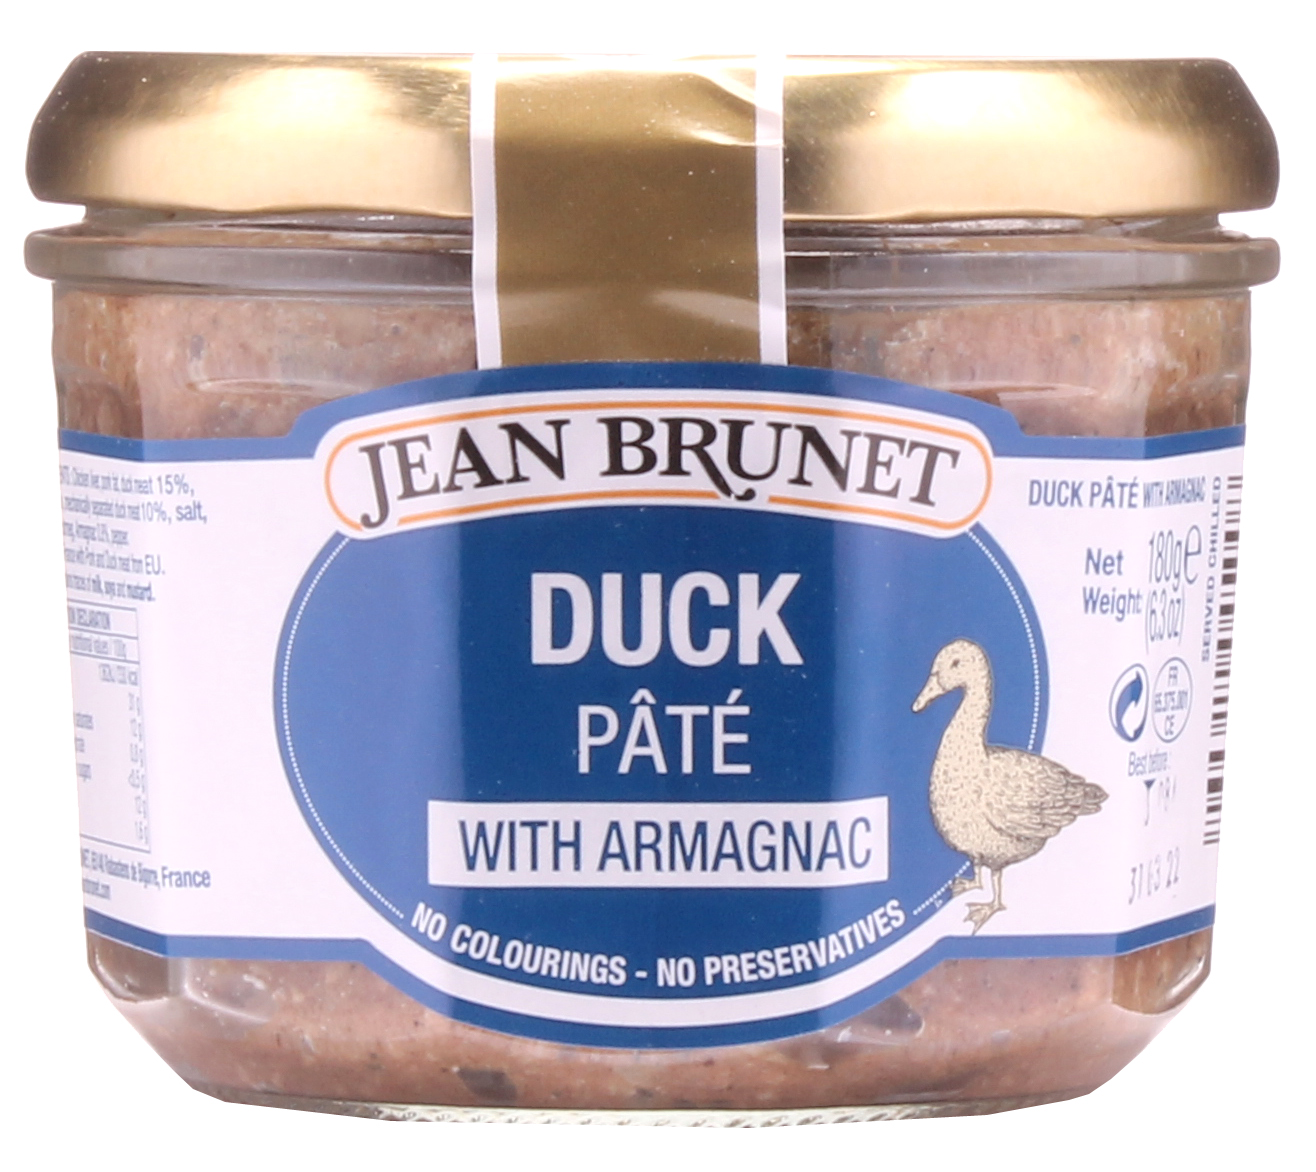 Jean Brunet Duck Pate with Armagnac Pate